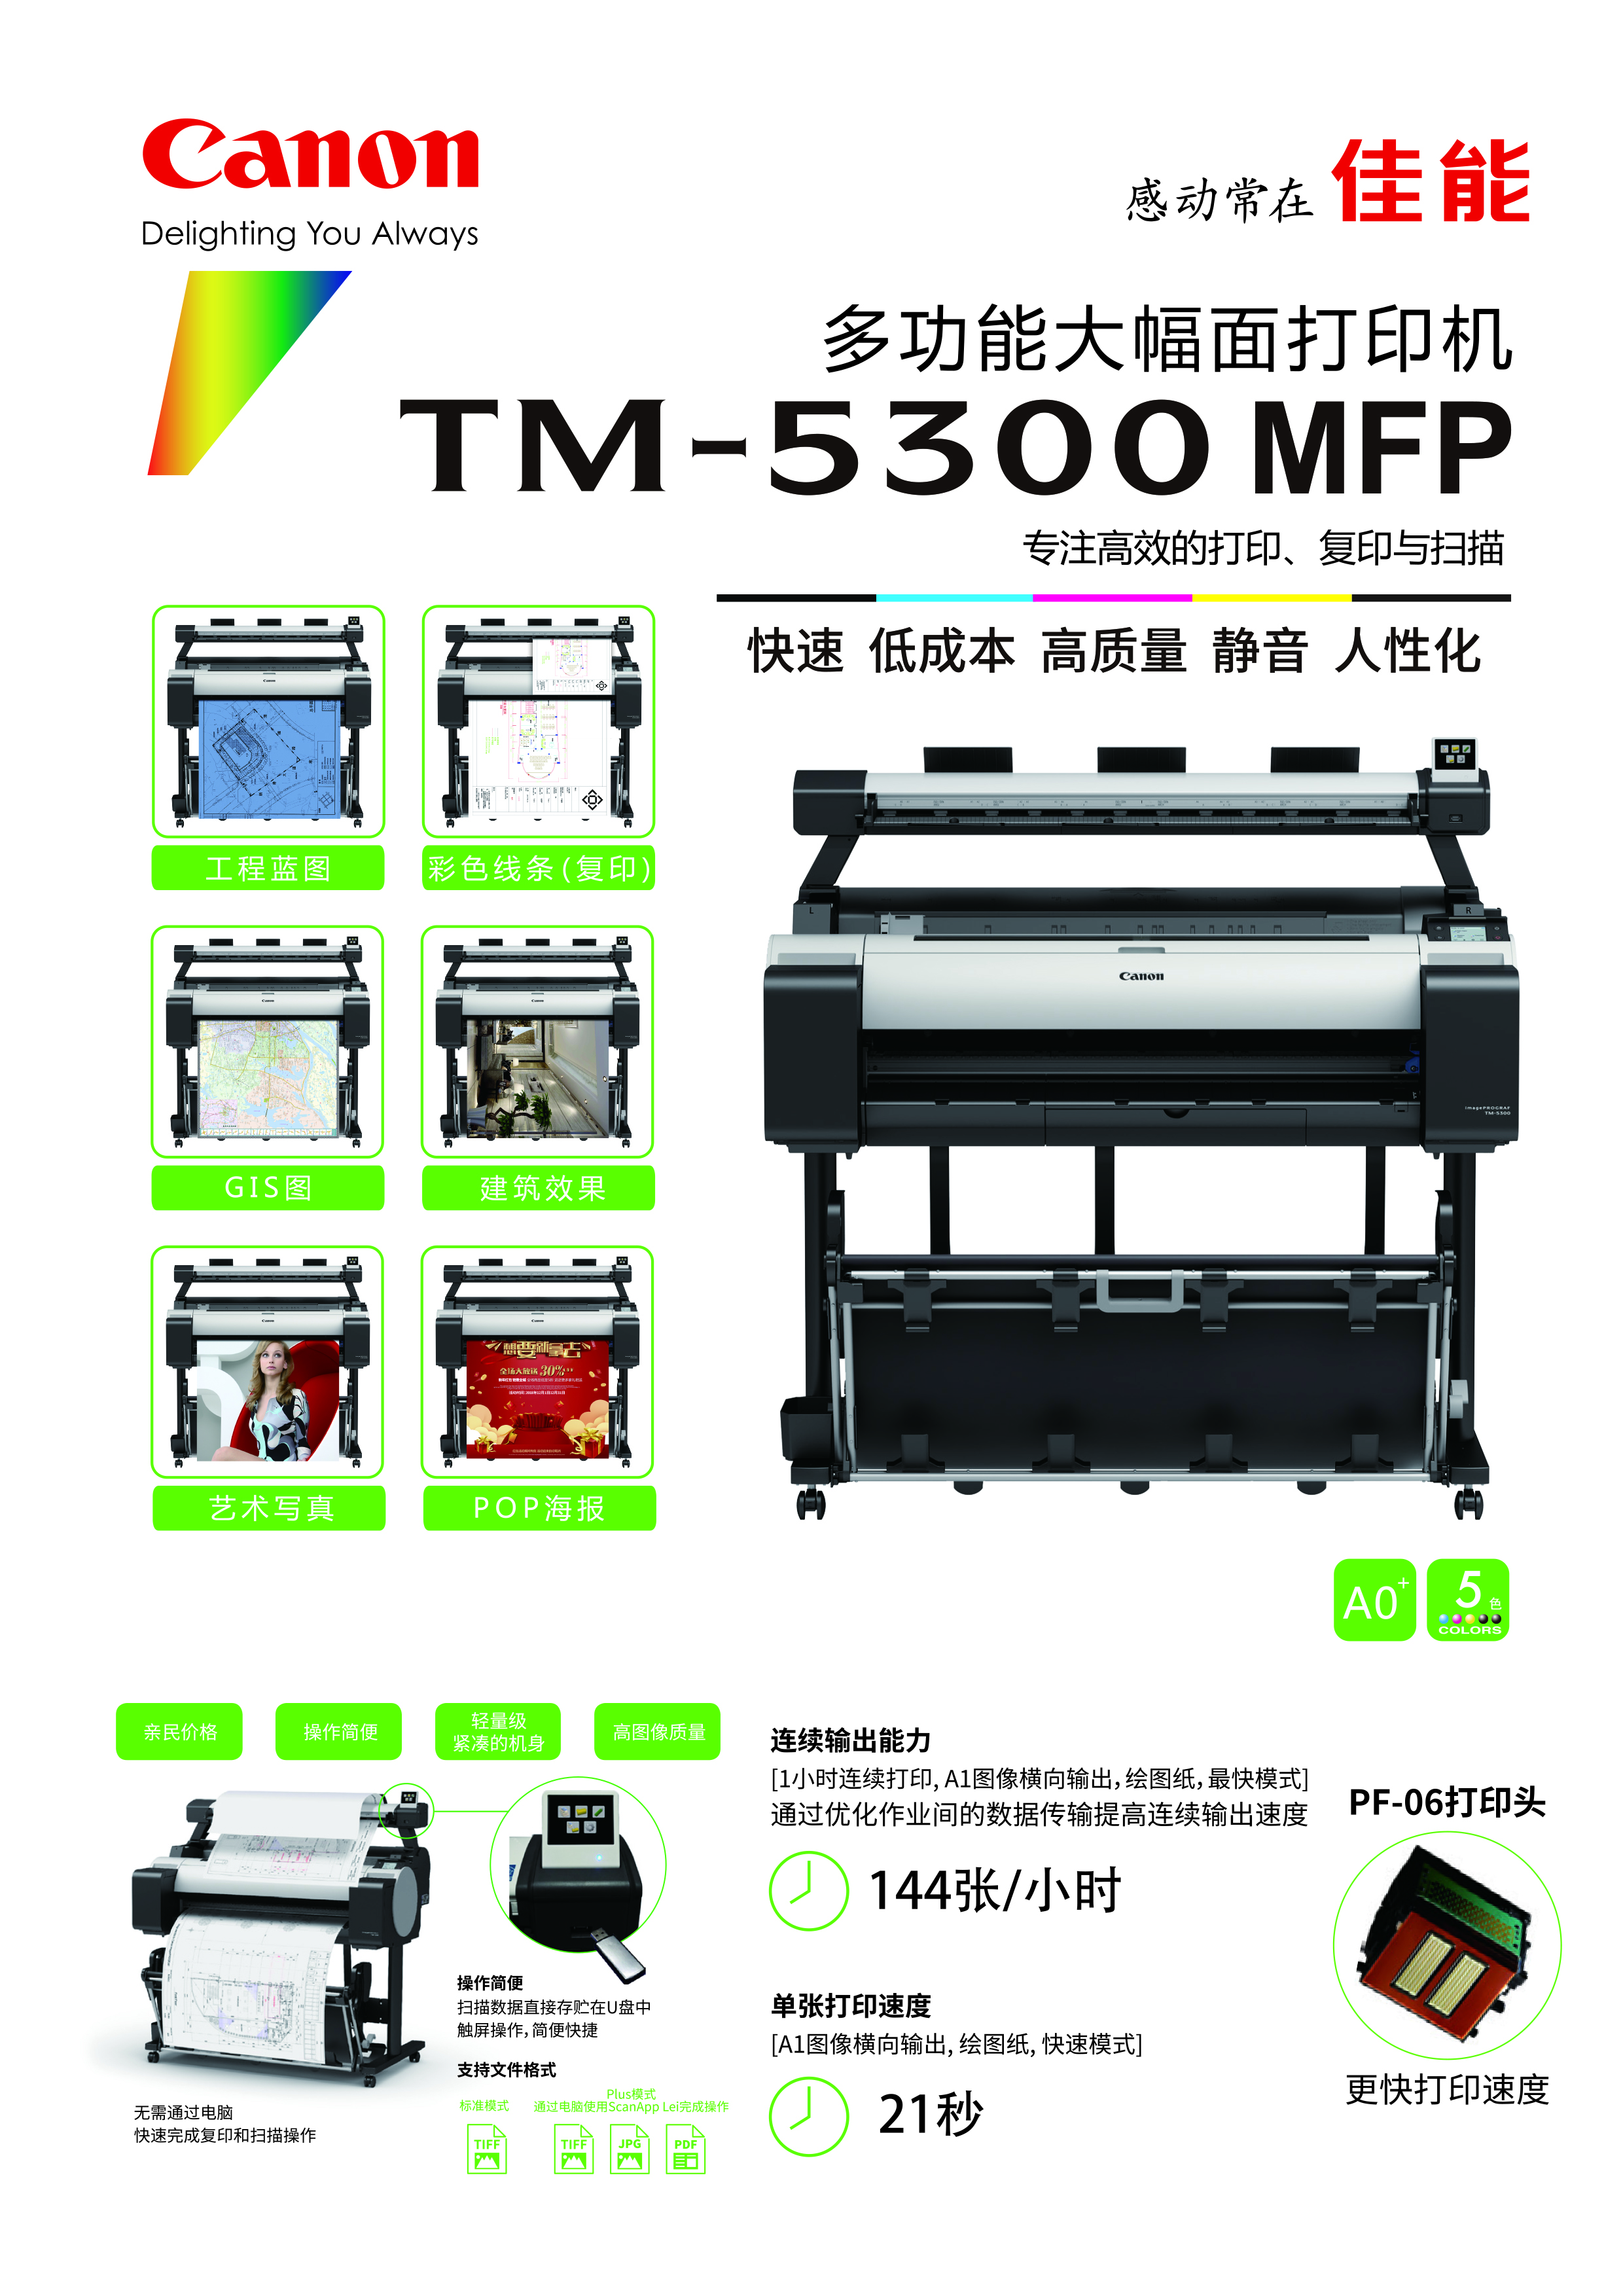 TM5300MFP_210X285印刷版-1.jpg